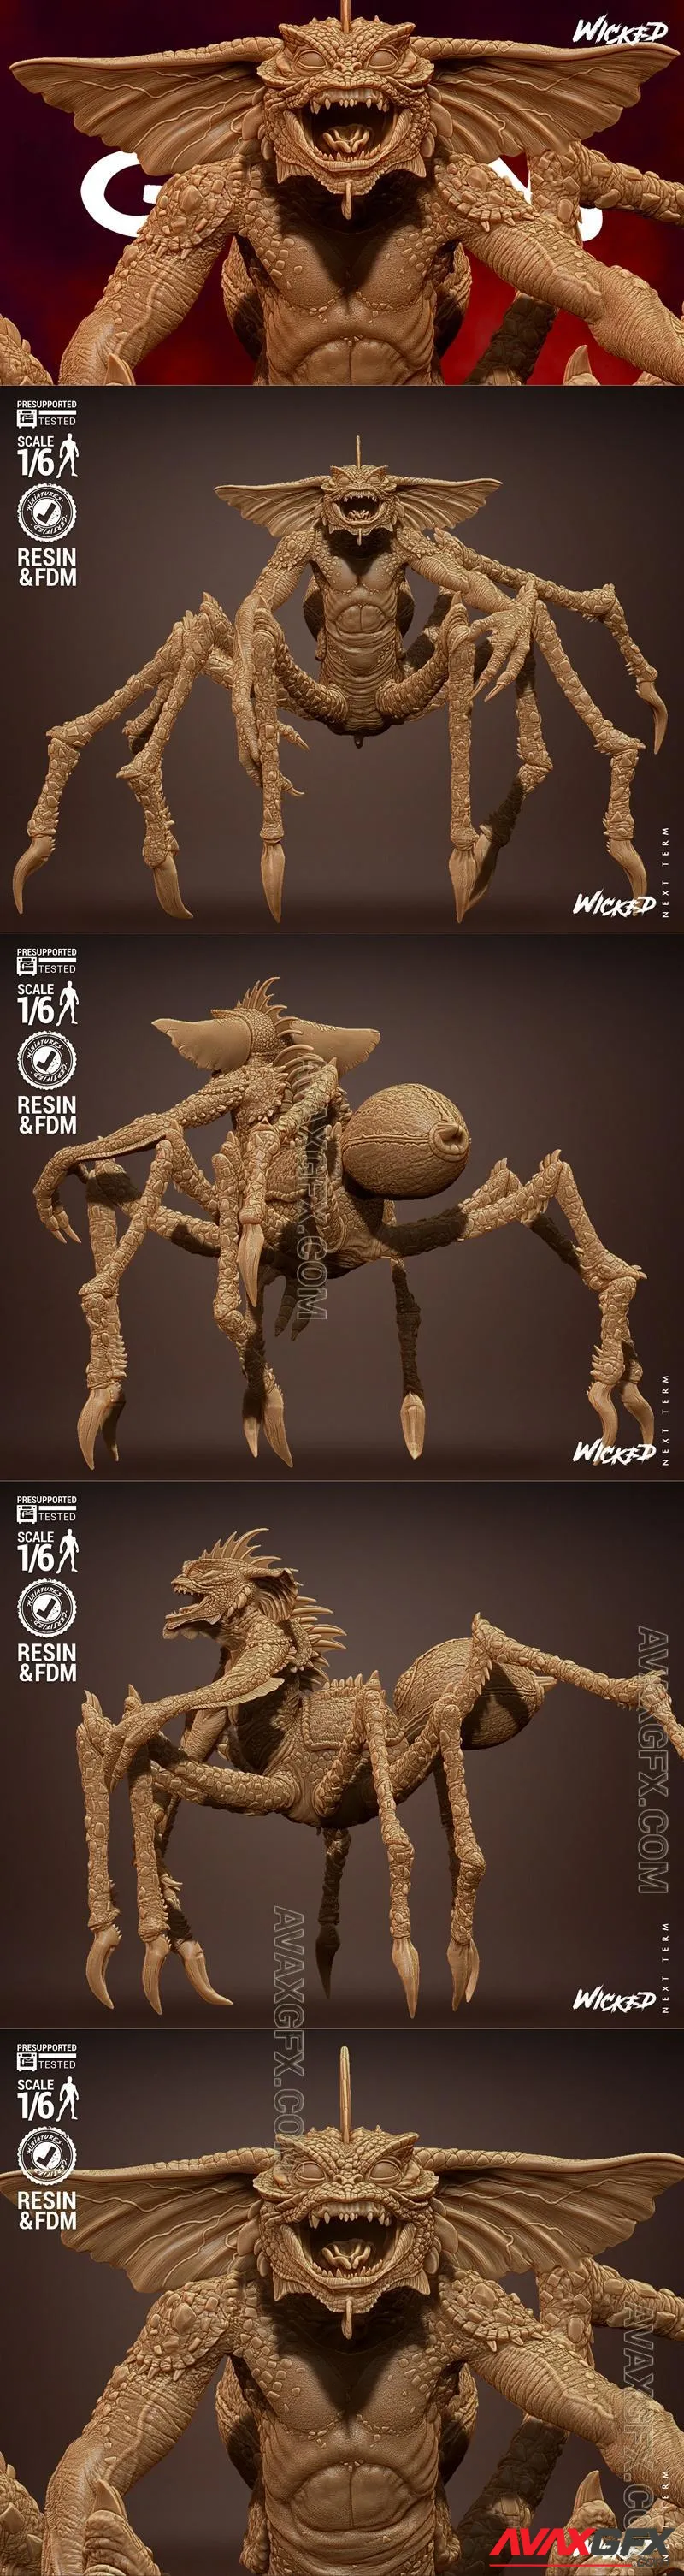 Wicked - Gremlins Spider Sculpture - STL 3D Model